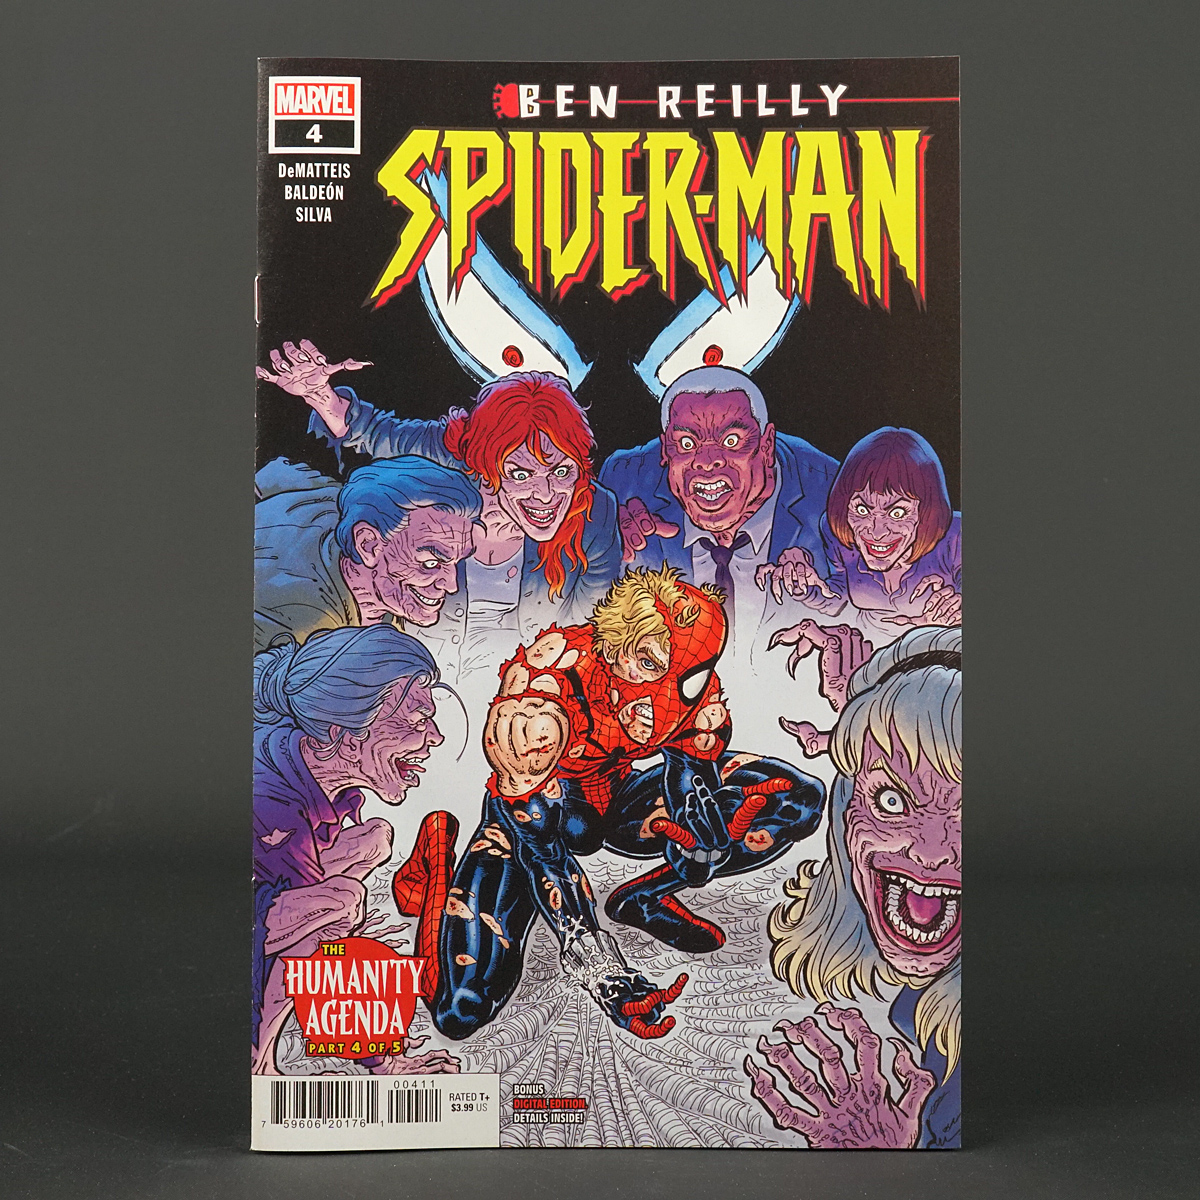 BEN REILLY SPIDER-MAN #4 Marvel Comics 2022 FEB220920 (CA) Skroce (W) Dematteis